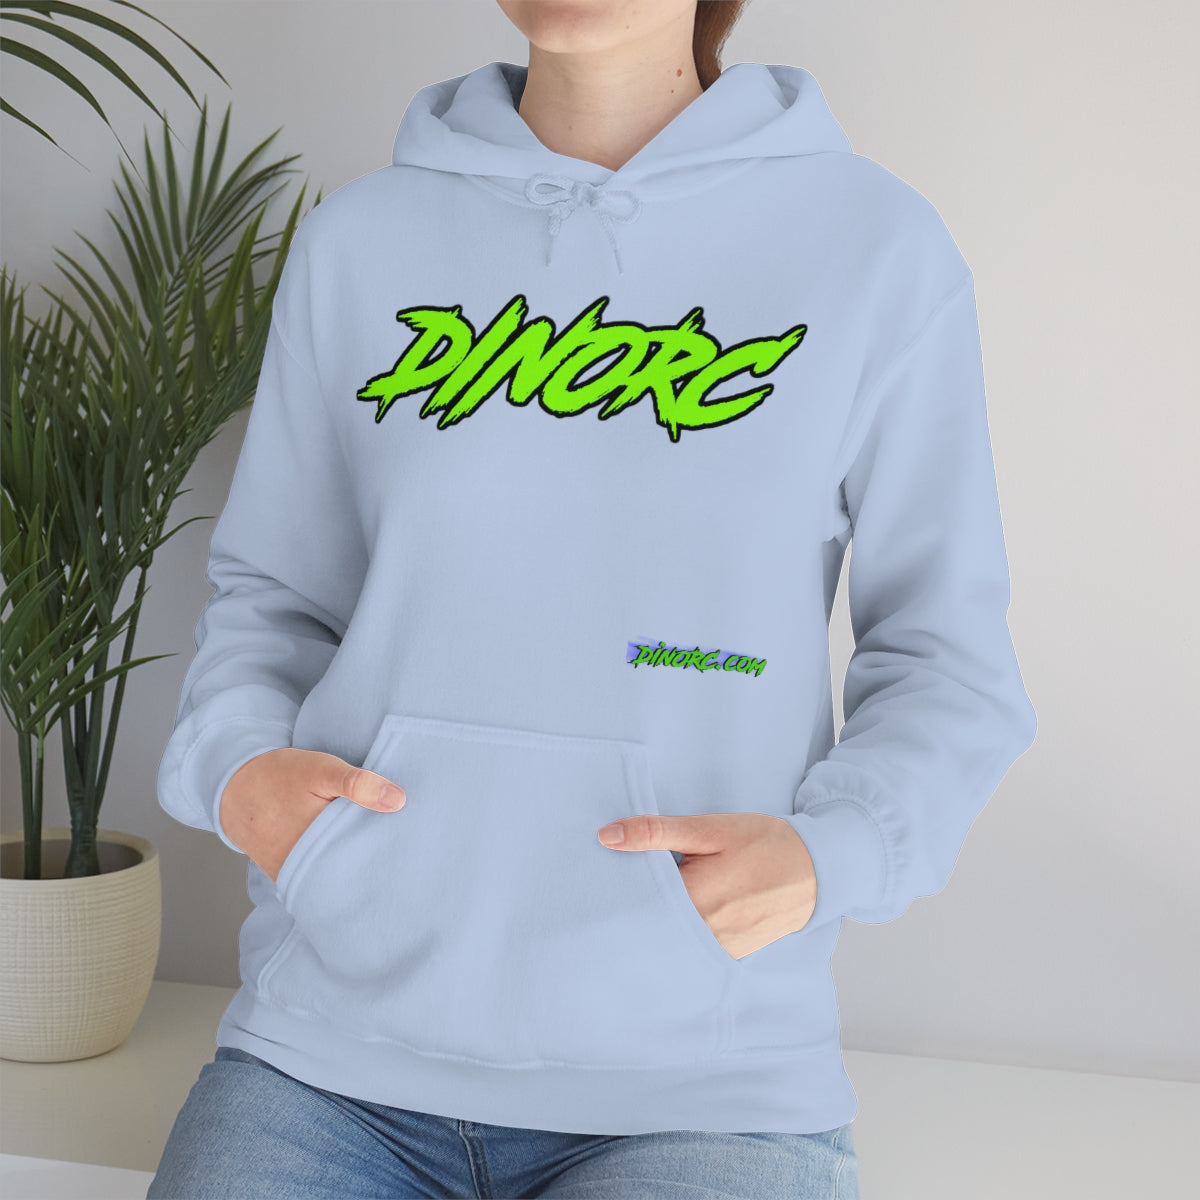 DinoRC Logo Hooded Sweatshirt Heavy Blend™ Hooded Sweatshirt